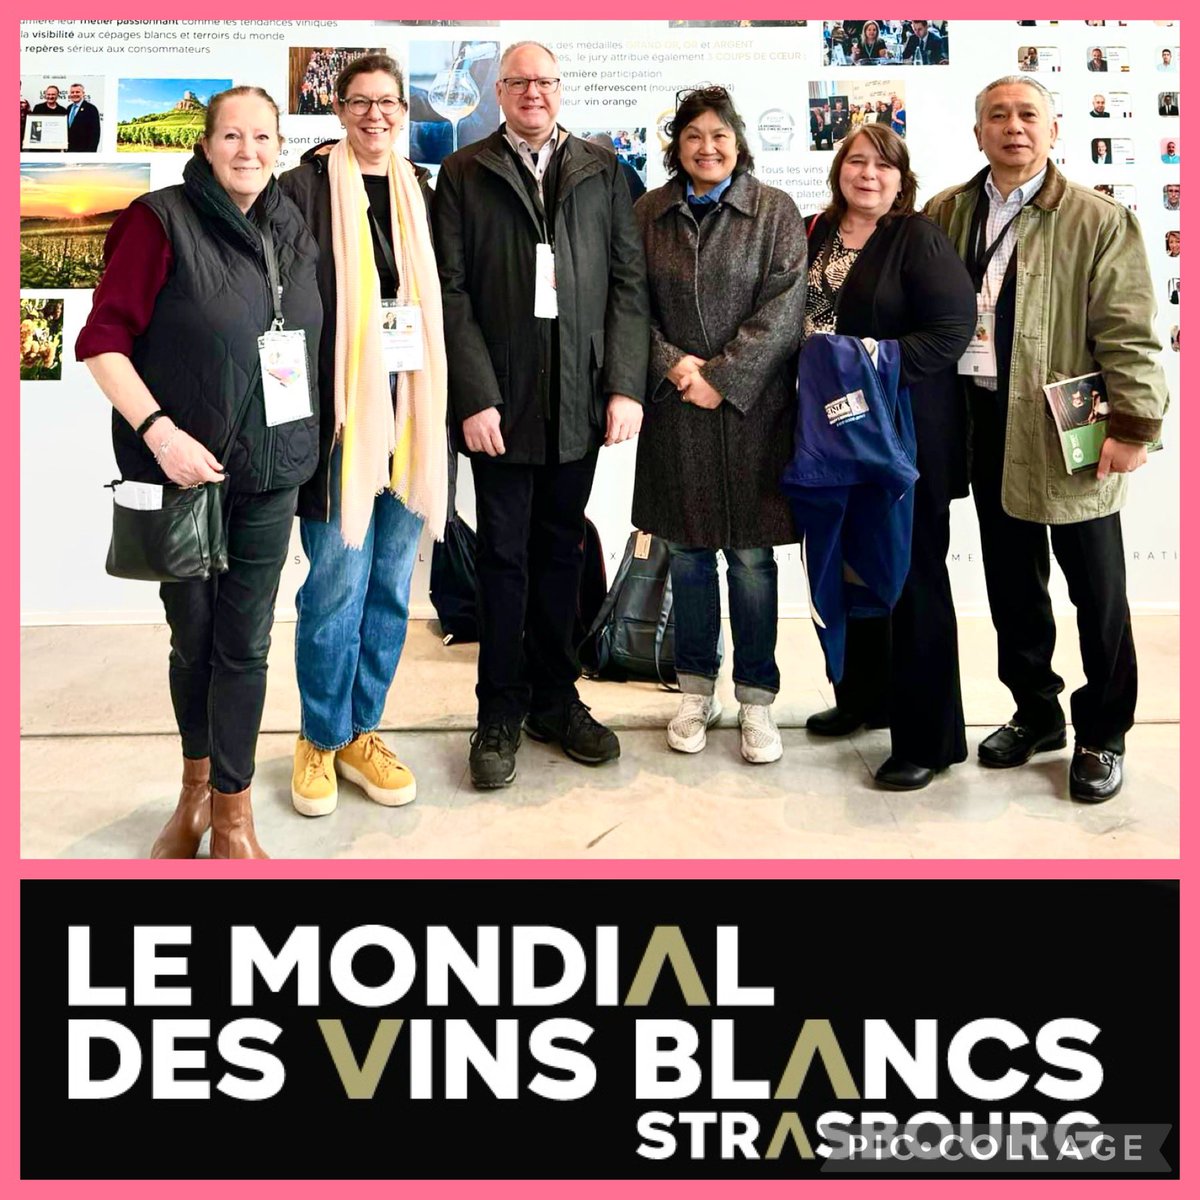 CWW - Circle of Wine Writers at Le Mondial des Vns Blancs Strasbourg, great seeing them here😊🌸🍾🍷
#CircleOfWineWriters #lemondialdesvinsblancs #sakesamurai #koshuvalleywine #koshuvalley #japanesecuisinegoodwillambassador #masterofsake #mastersakesommelier #strasbourgwine